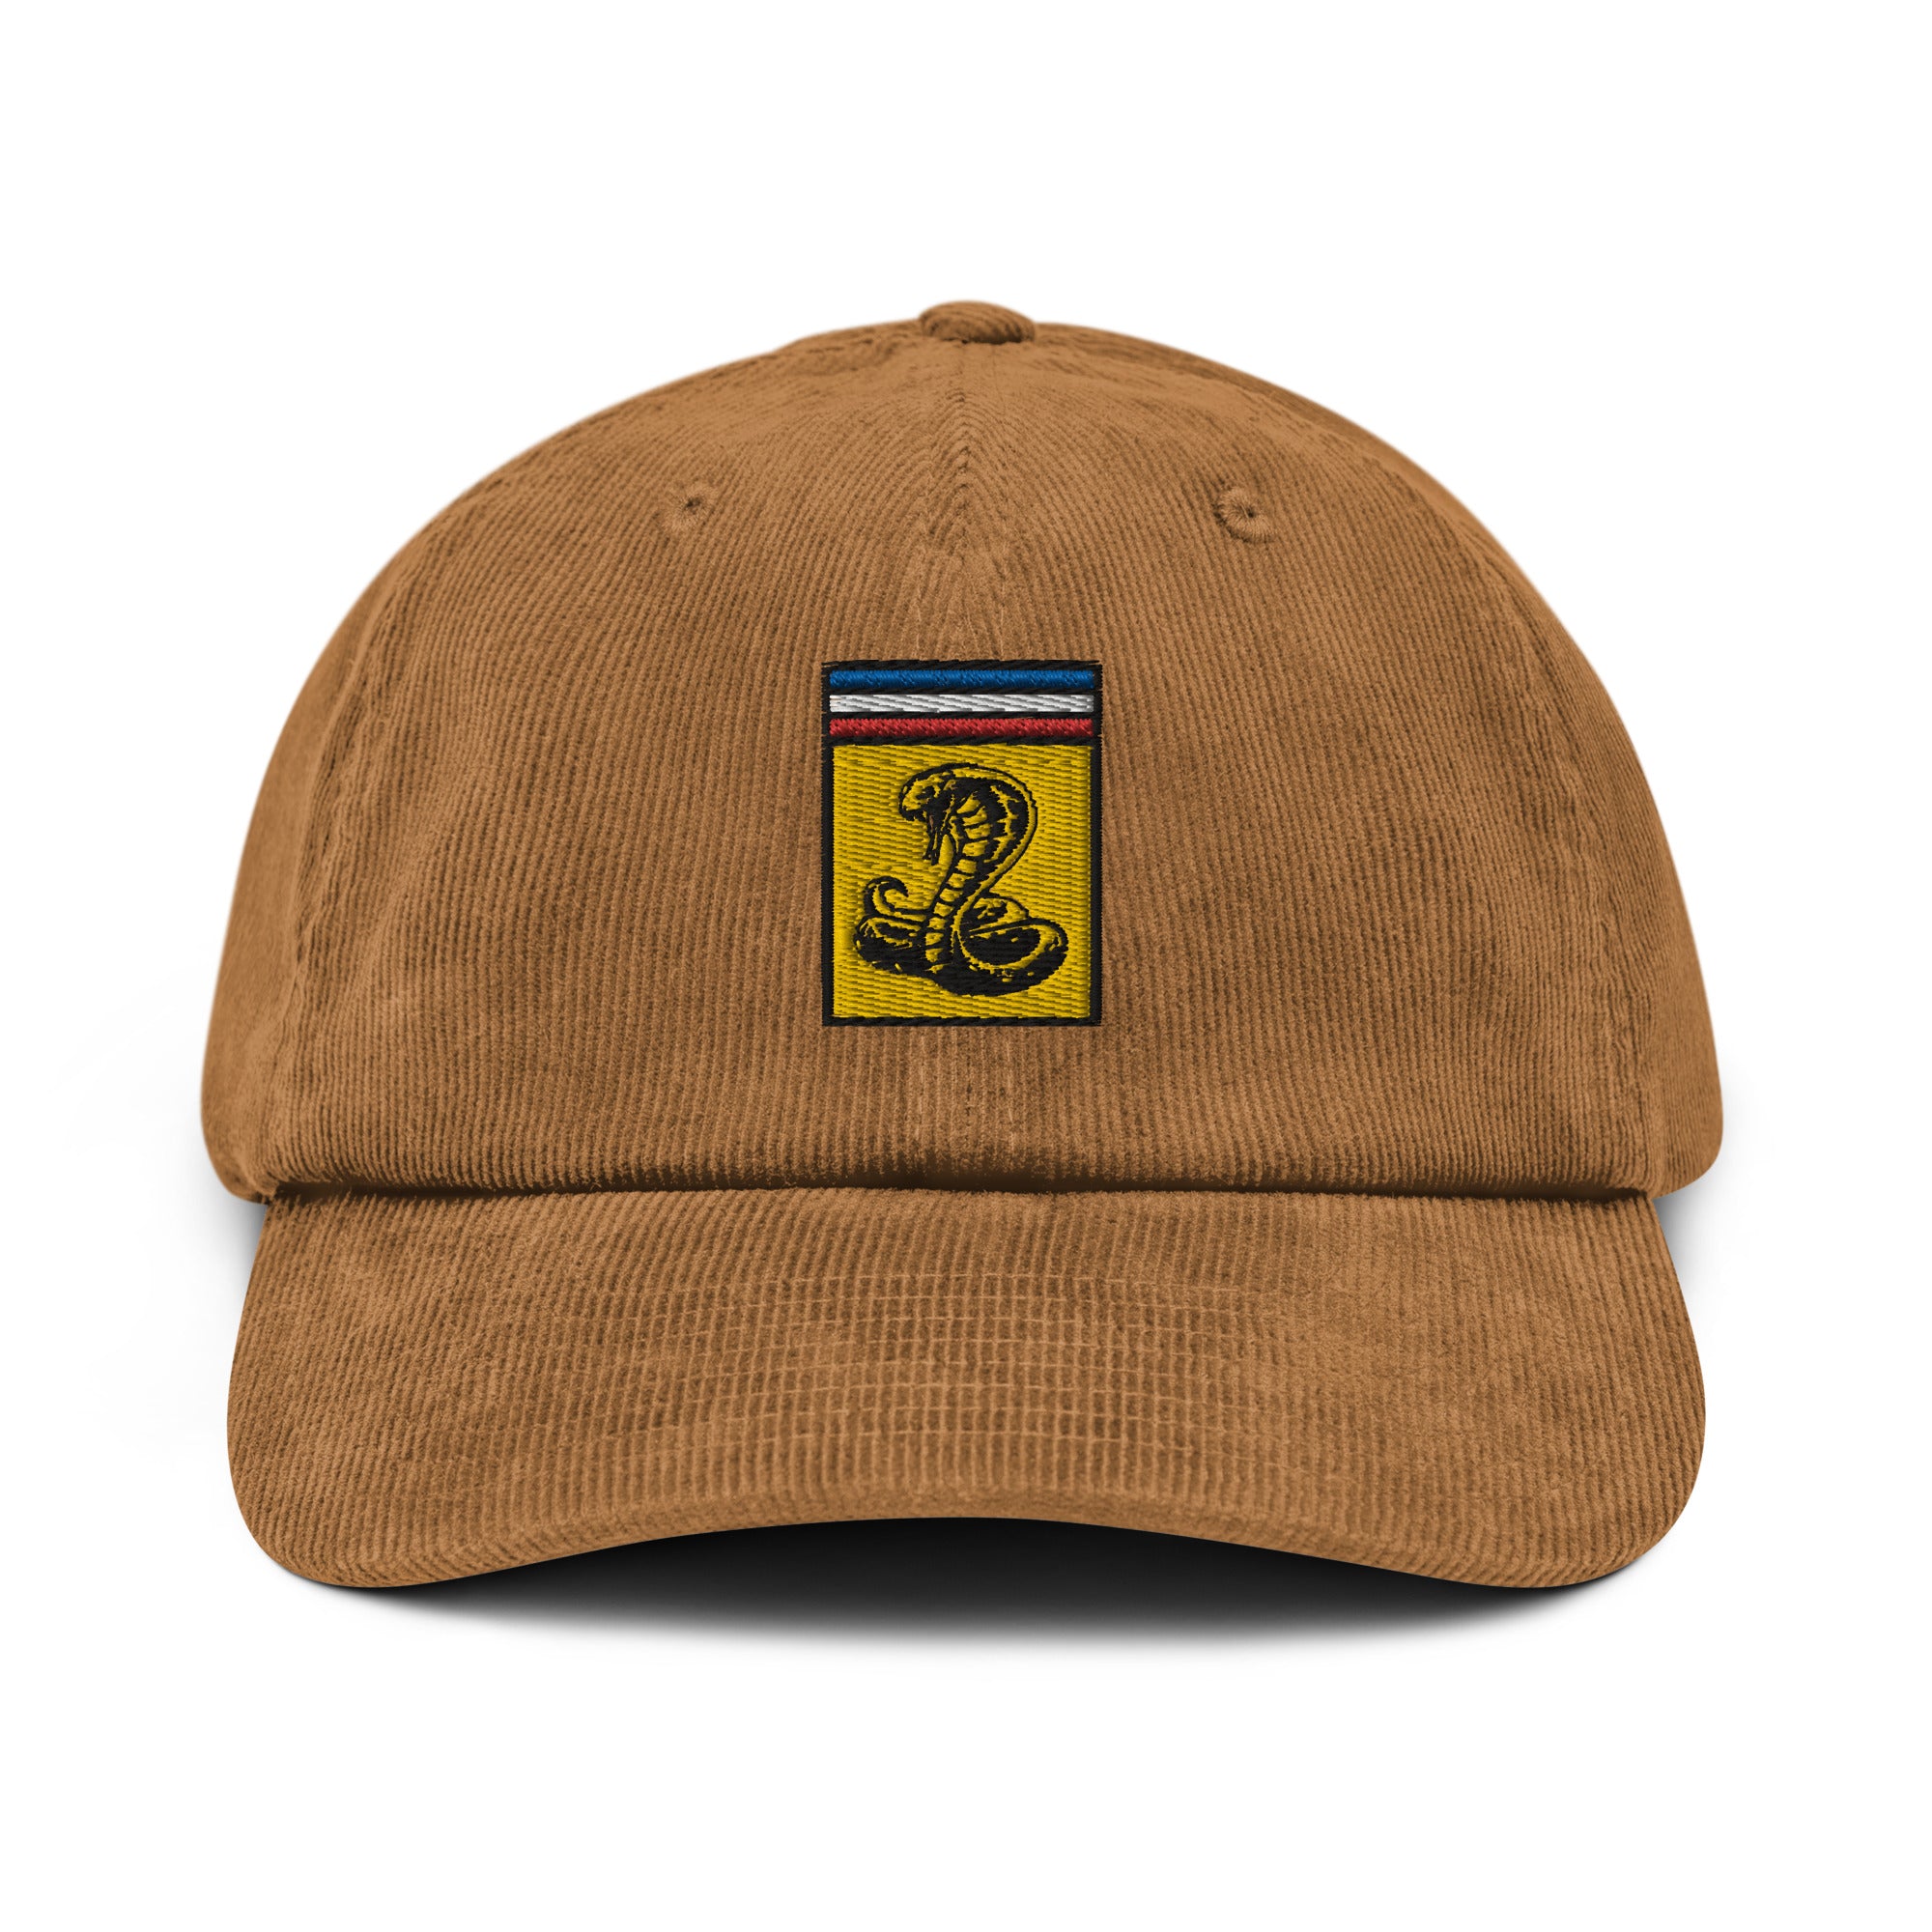 Emblem Corduroy hat